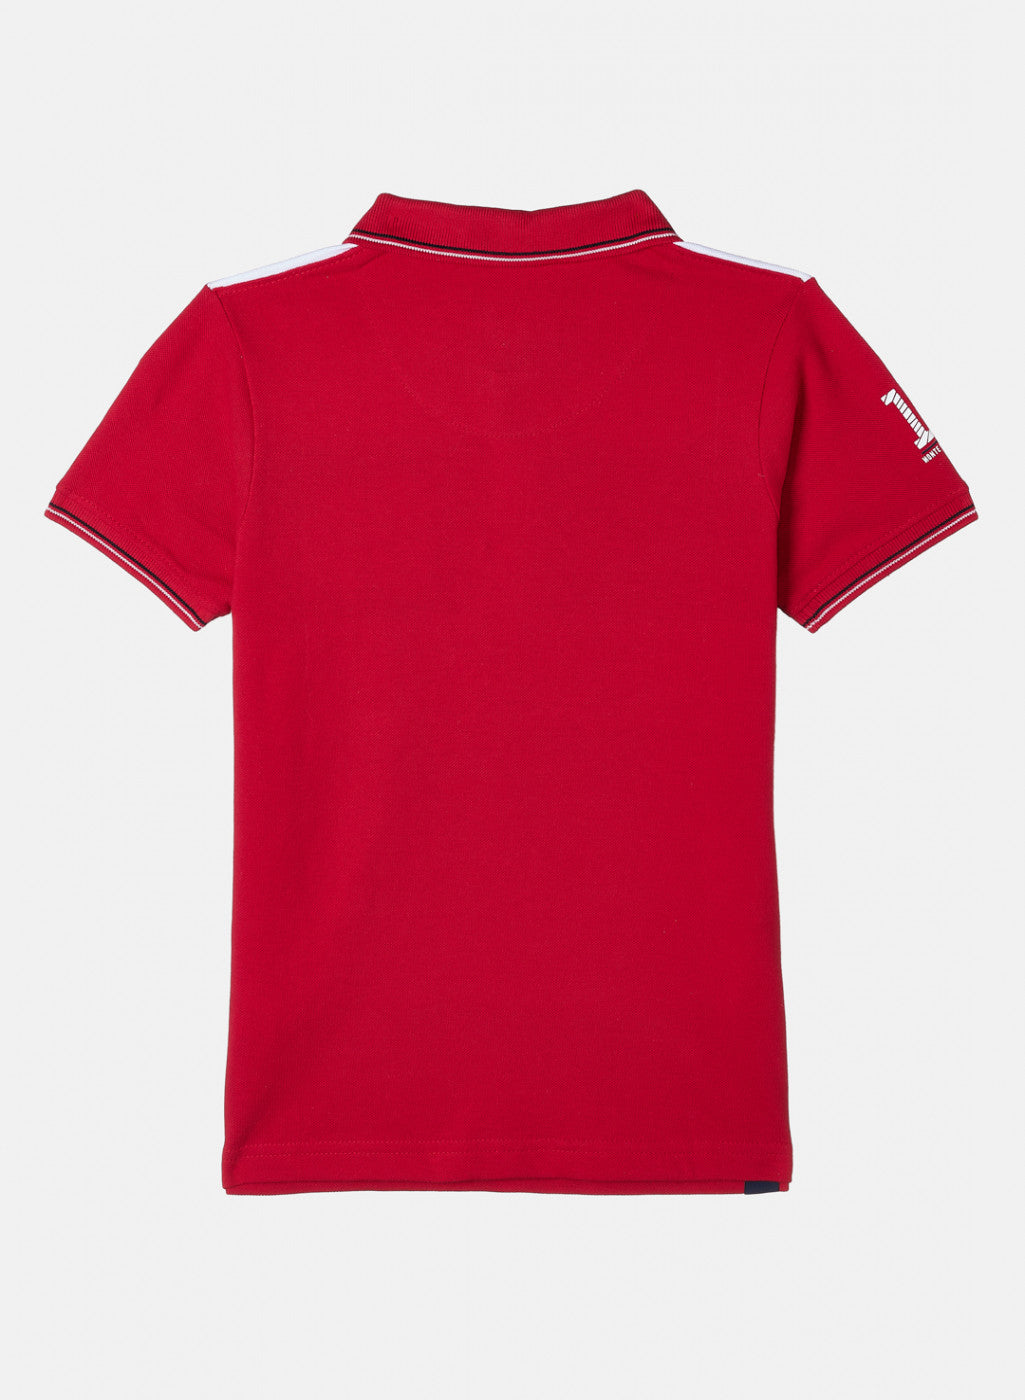 Boys Red & White Stripe T-Shirt